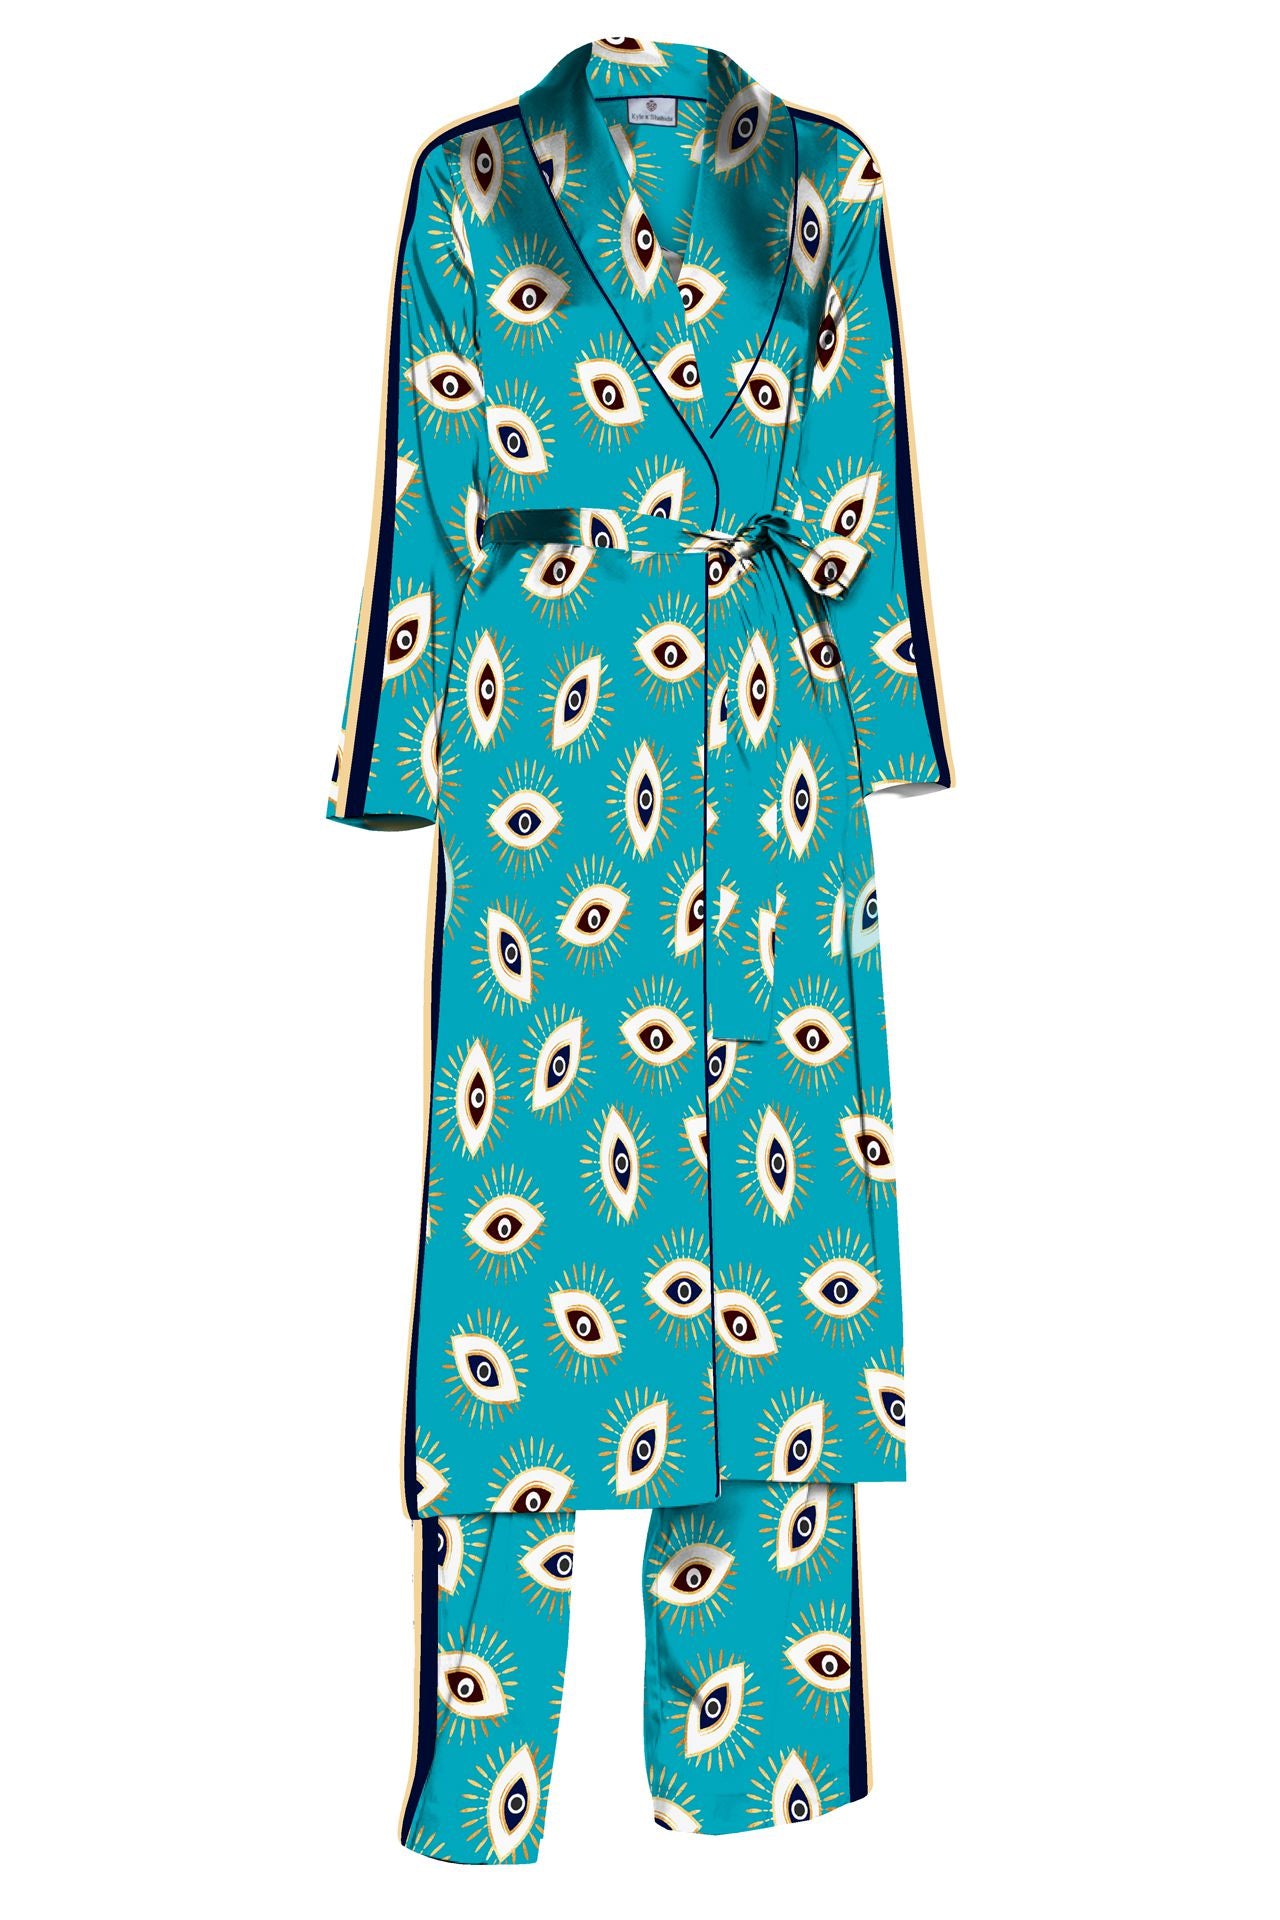 "Kyle X Shahida" "womens pajamas and robe" "matching robe and pajamas" "robe set women"